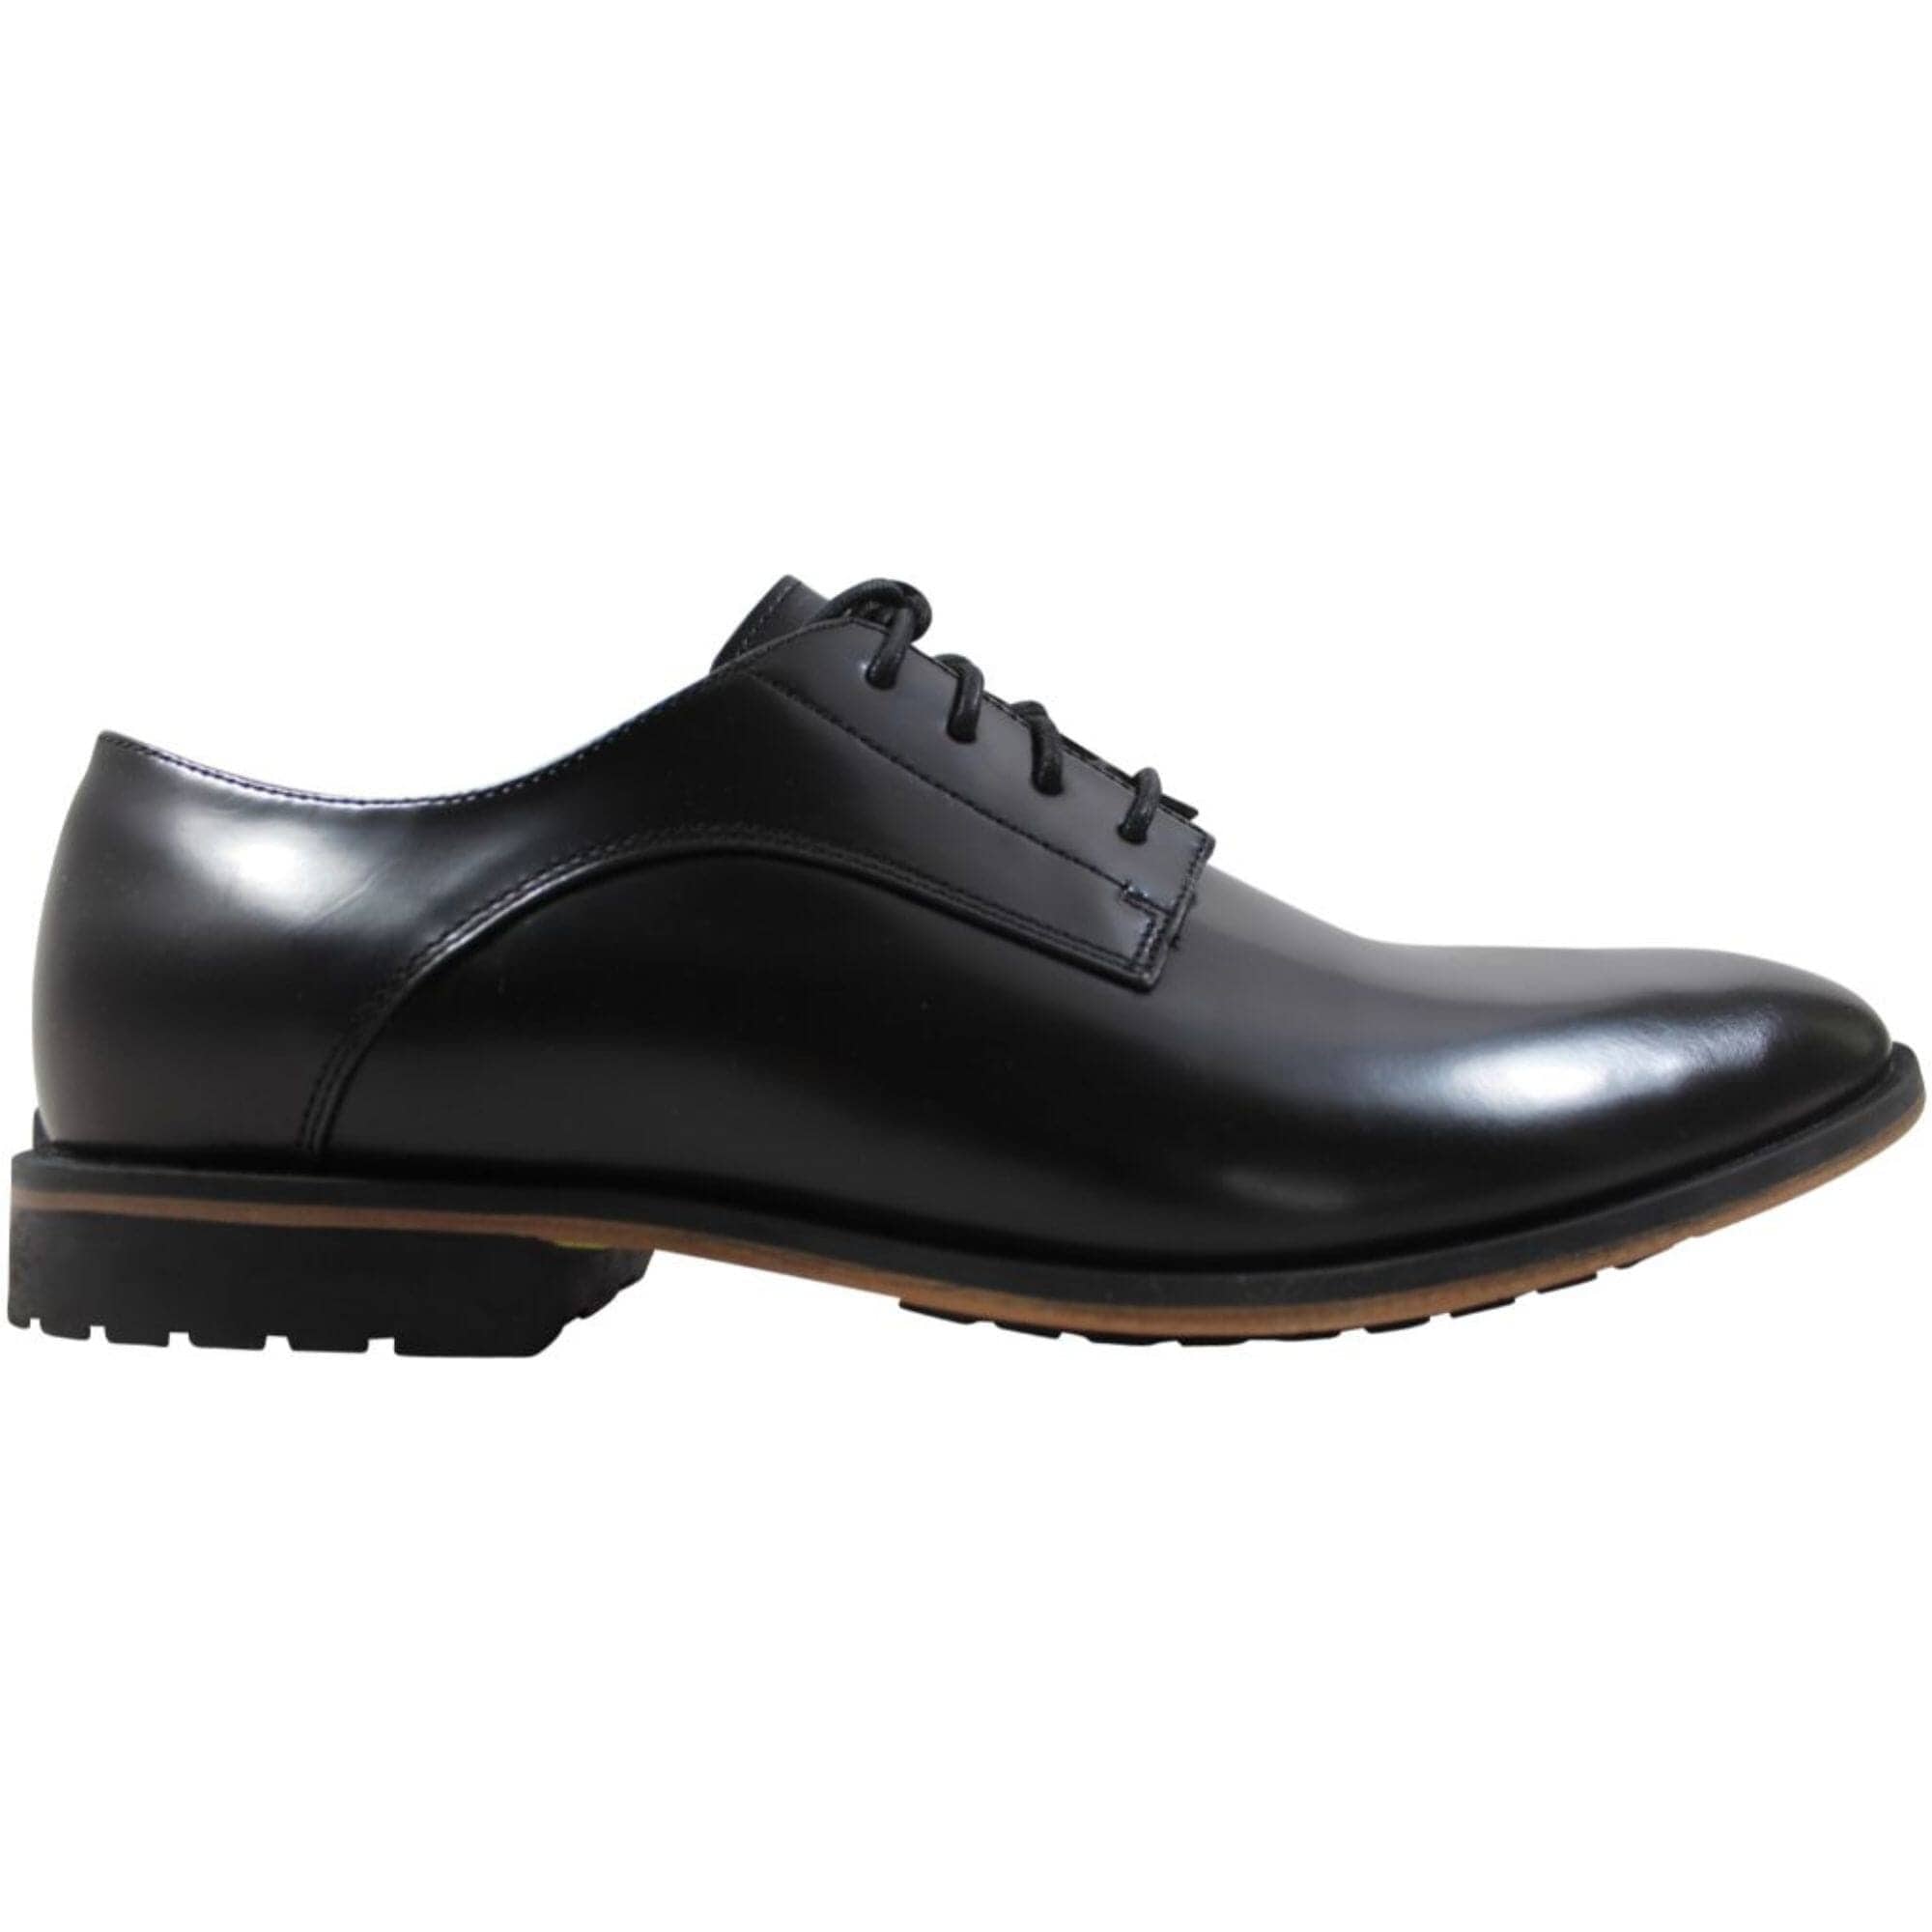 clarks gatley patent leather dress shoes